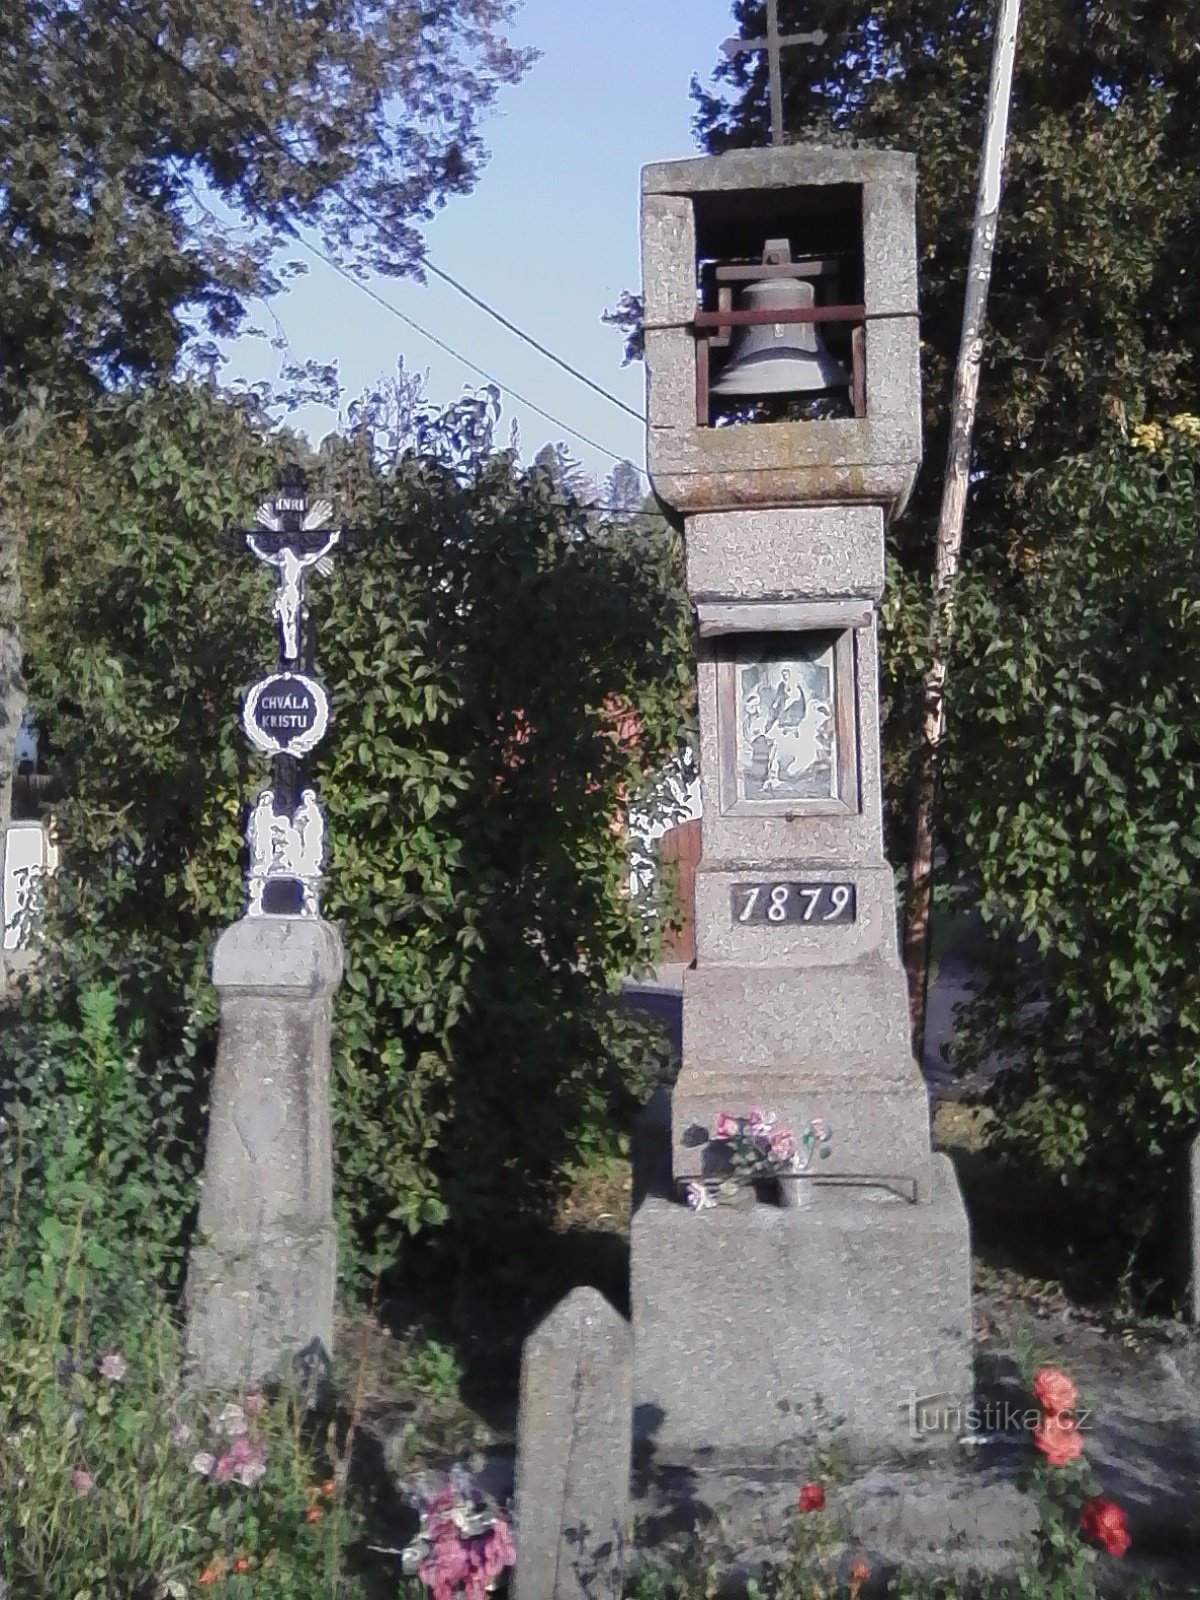 2. Vilasová Lhota の 1879 年に建てられた十字架のある石造りの鐘楼